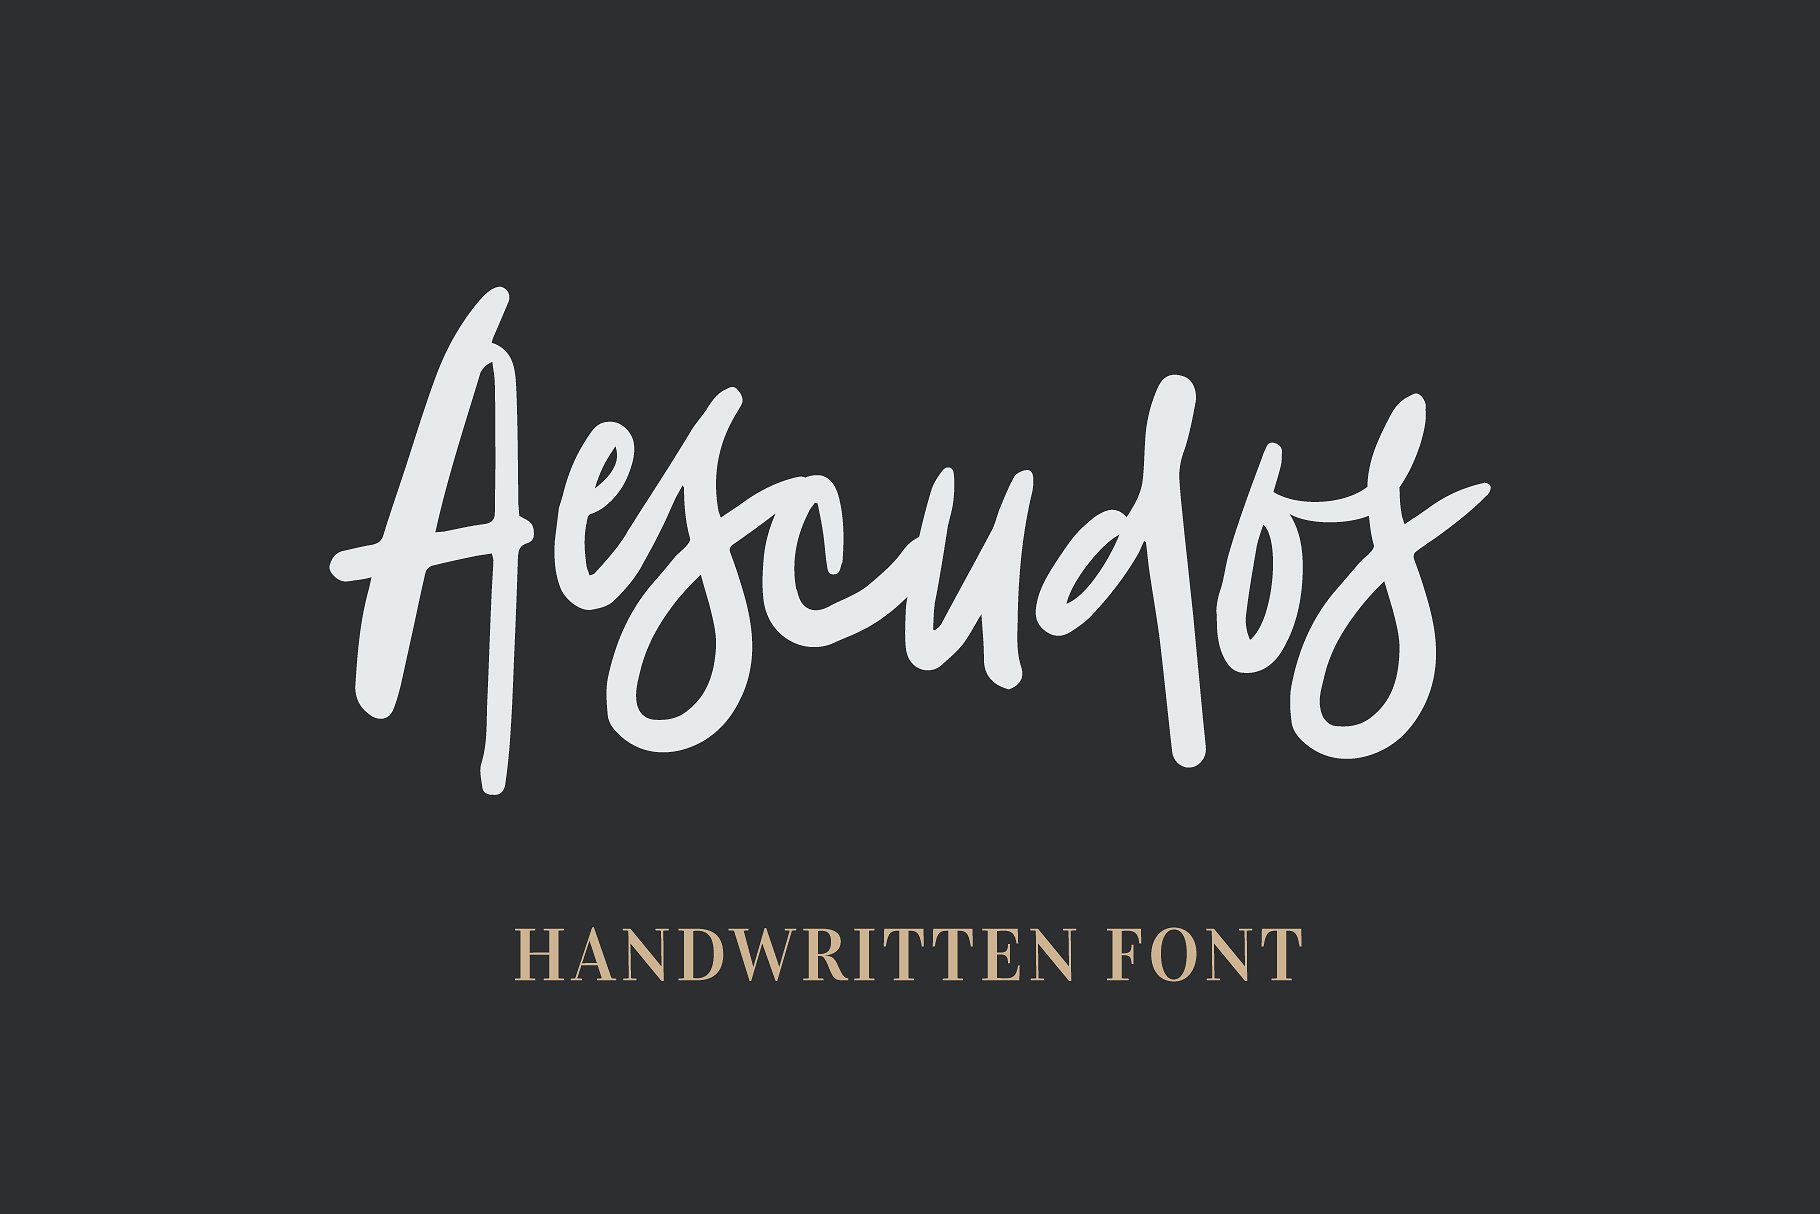 自然的手写字体 Aescudos Handwritten Font插图